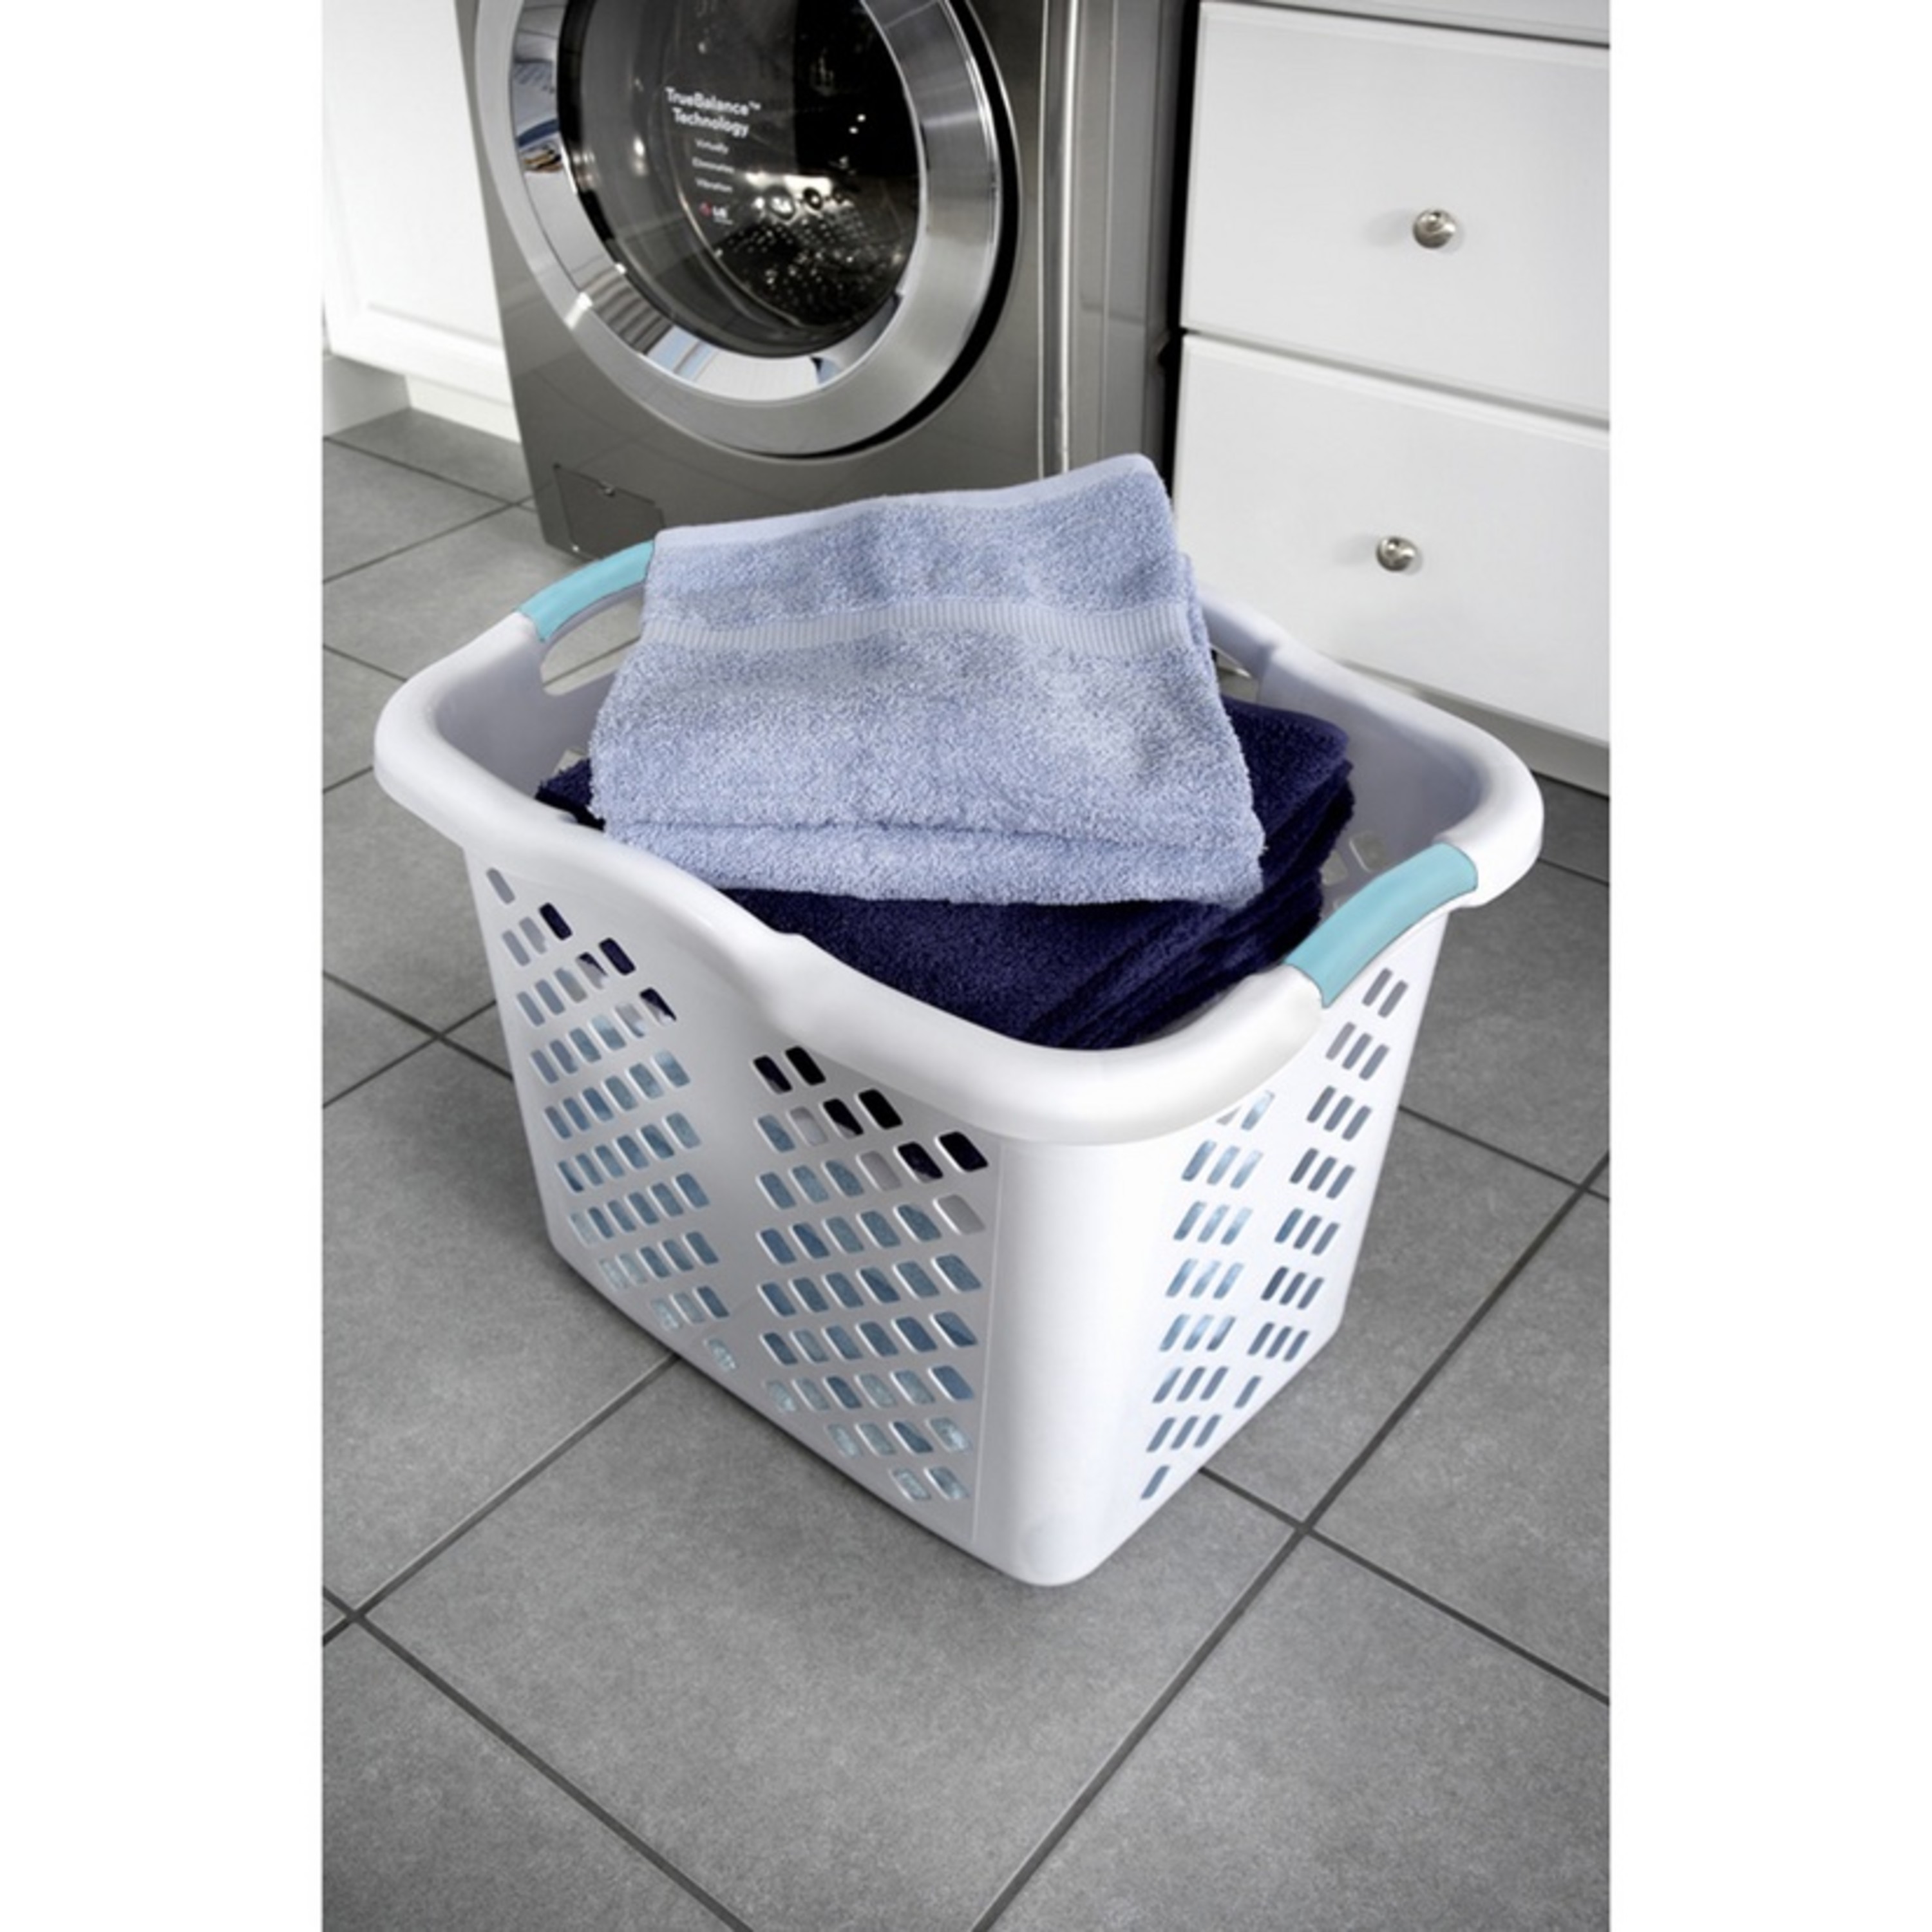 Home Logic 2 Bushel Lamper Laundry Basket with Silver Handles, White - image 5 of 8